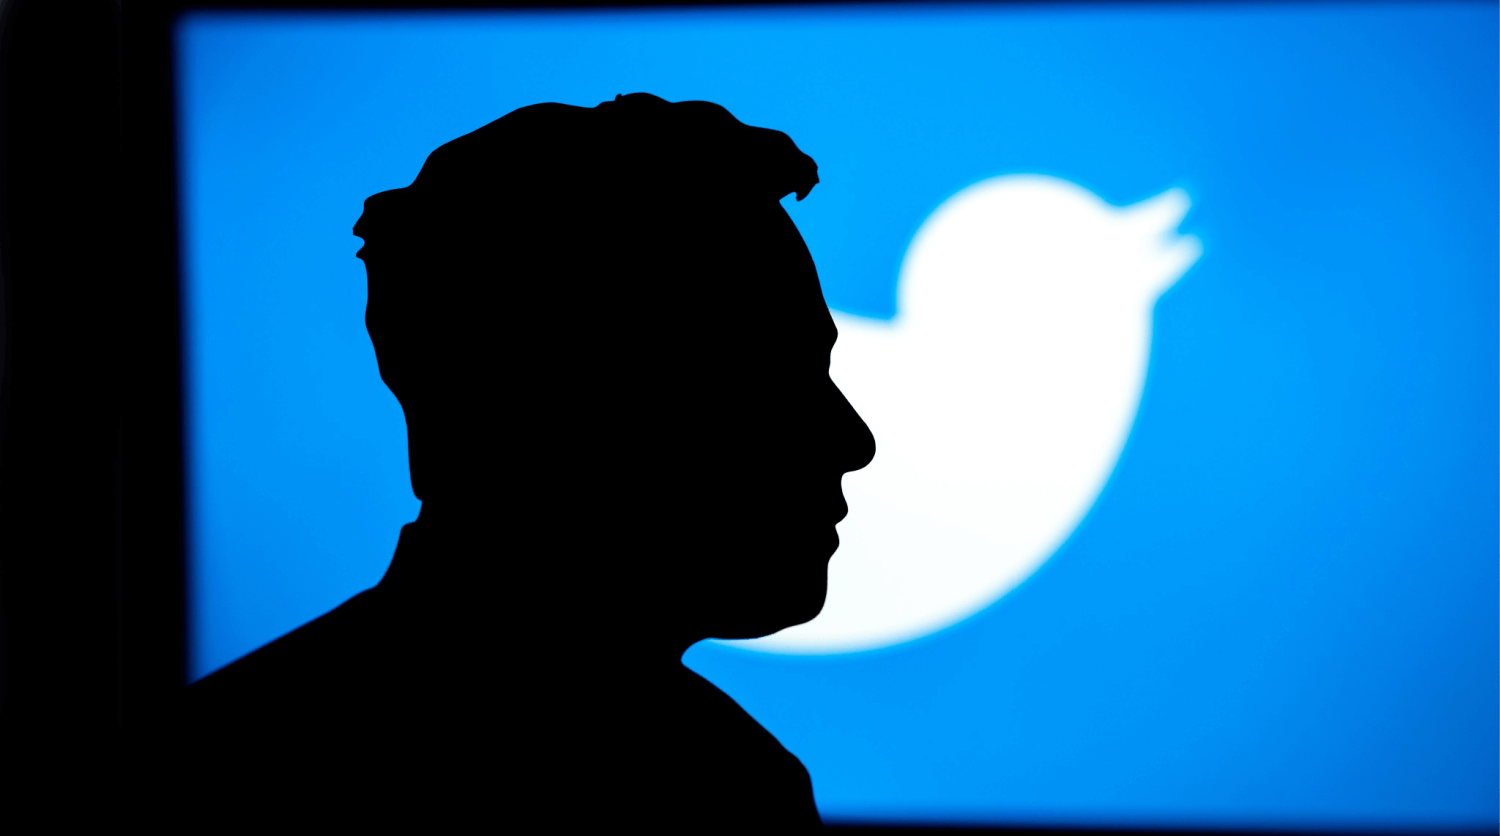 Elon Musk silhouette on Twitter logo